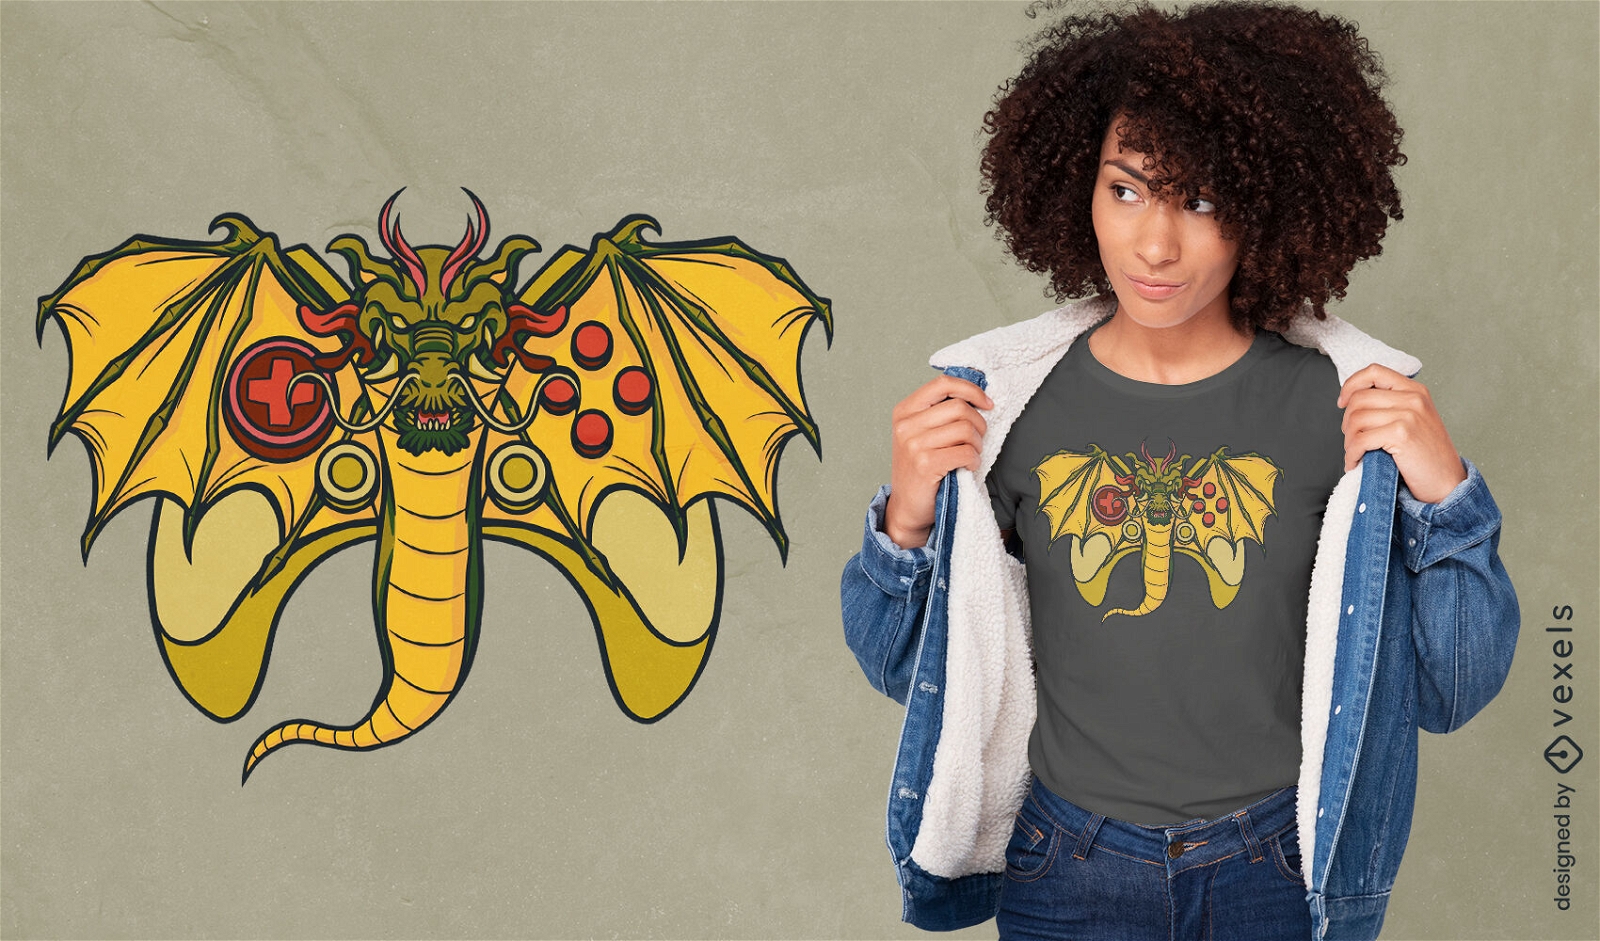 Dragon joystick gaming t-shirt design